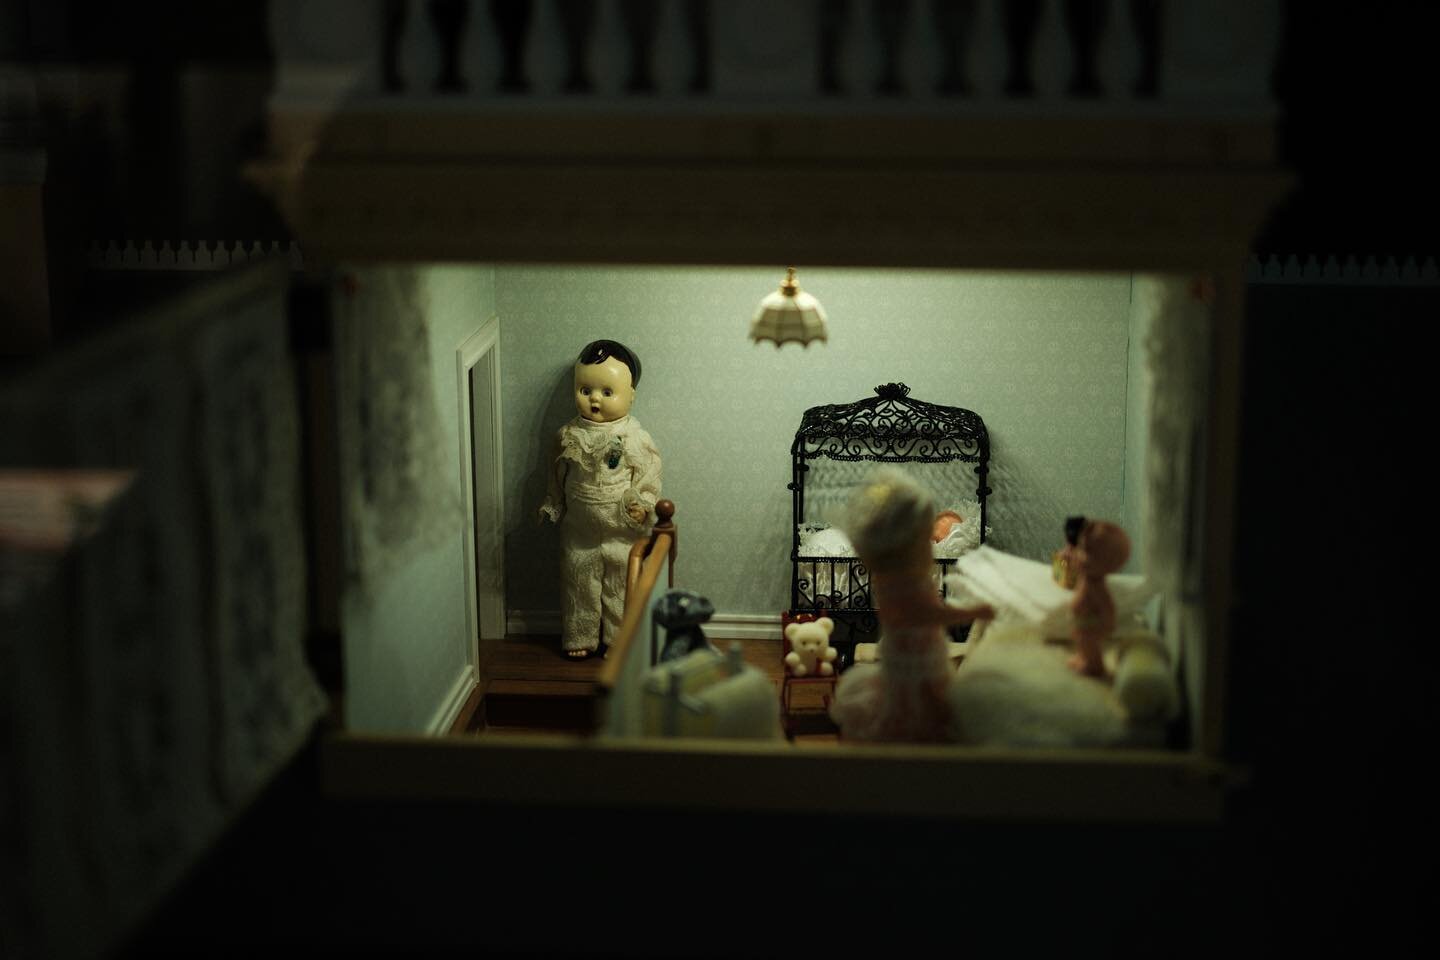 𝔻𝕠𝕝𝕝𝕙𝕠𝕦𝕤𝕖
.
.
.
.
.
.
.
.
.
#𝕤𝕙𝕠𝕥𝕠𝕟𝕗𝕦𝕛𝕚𝕗𝕚𝕝𝕞 #𝕗𝕝𝕪𝕚𝕟𝕘 #𝕗𝕦𝕛𝕚𝕗𝕚𝕝𝕞 #35𝕞𝕞  #𝕨𝕒𝕟𝕒𝕜𝕒 #wanakatoyandtransportmuseum #dollhouse #dollhouseminiatures #creepydolls